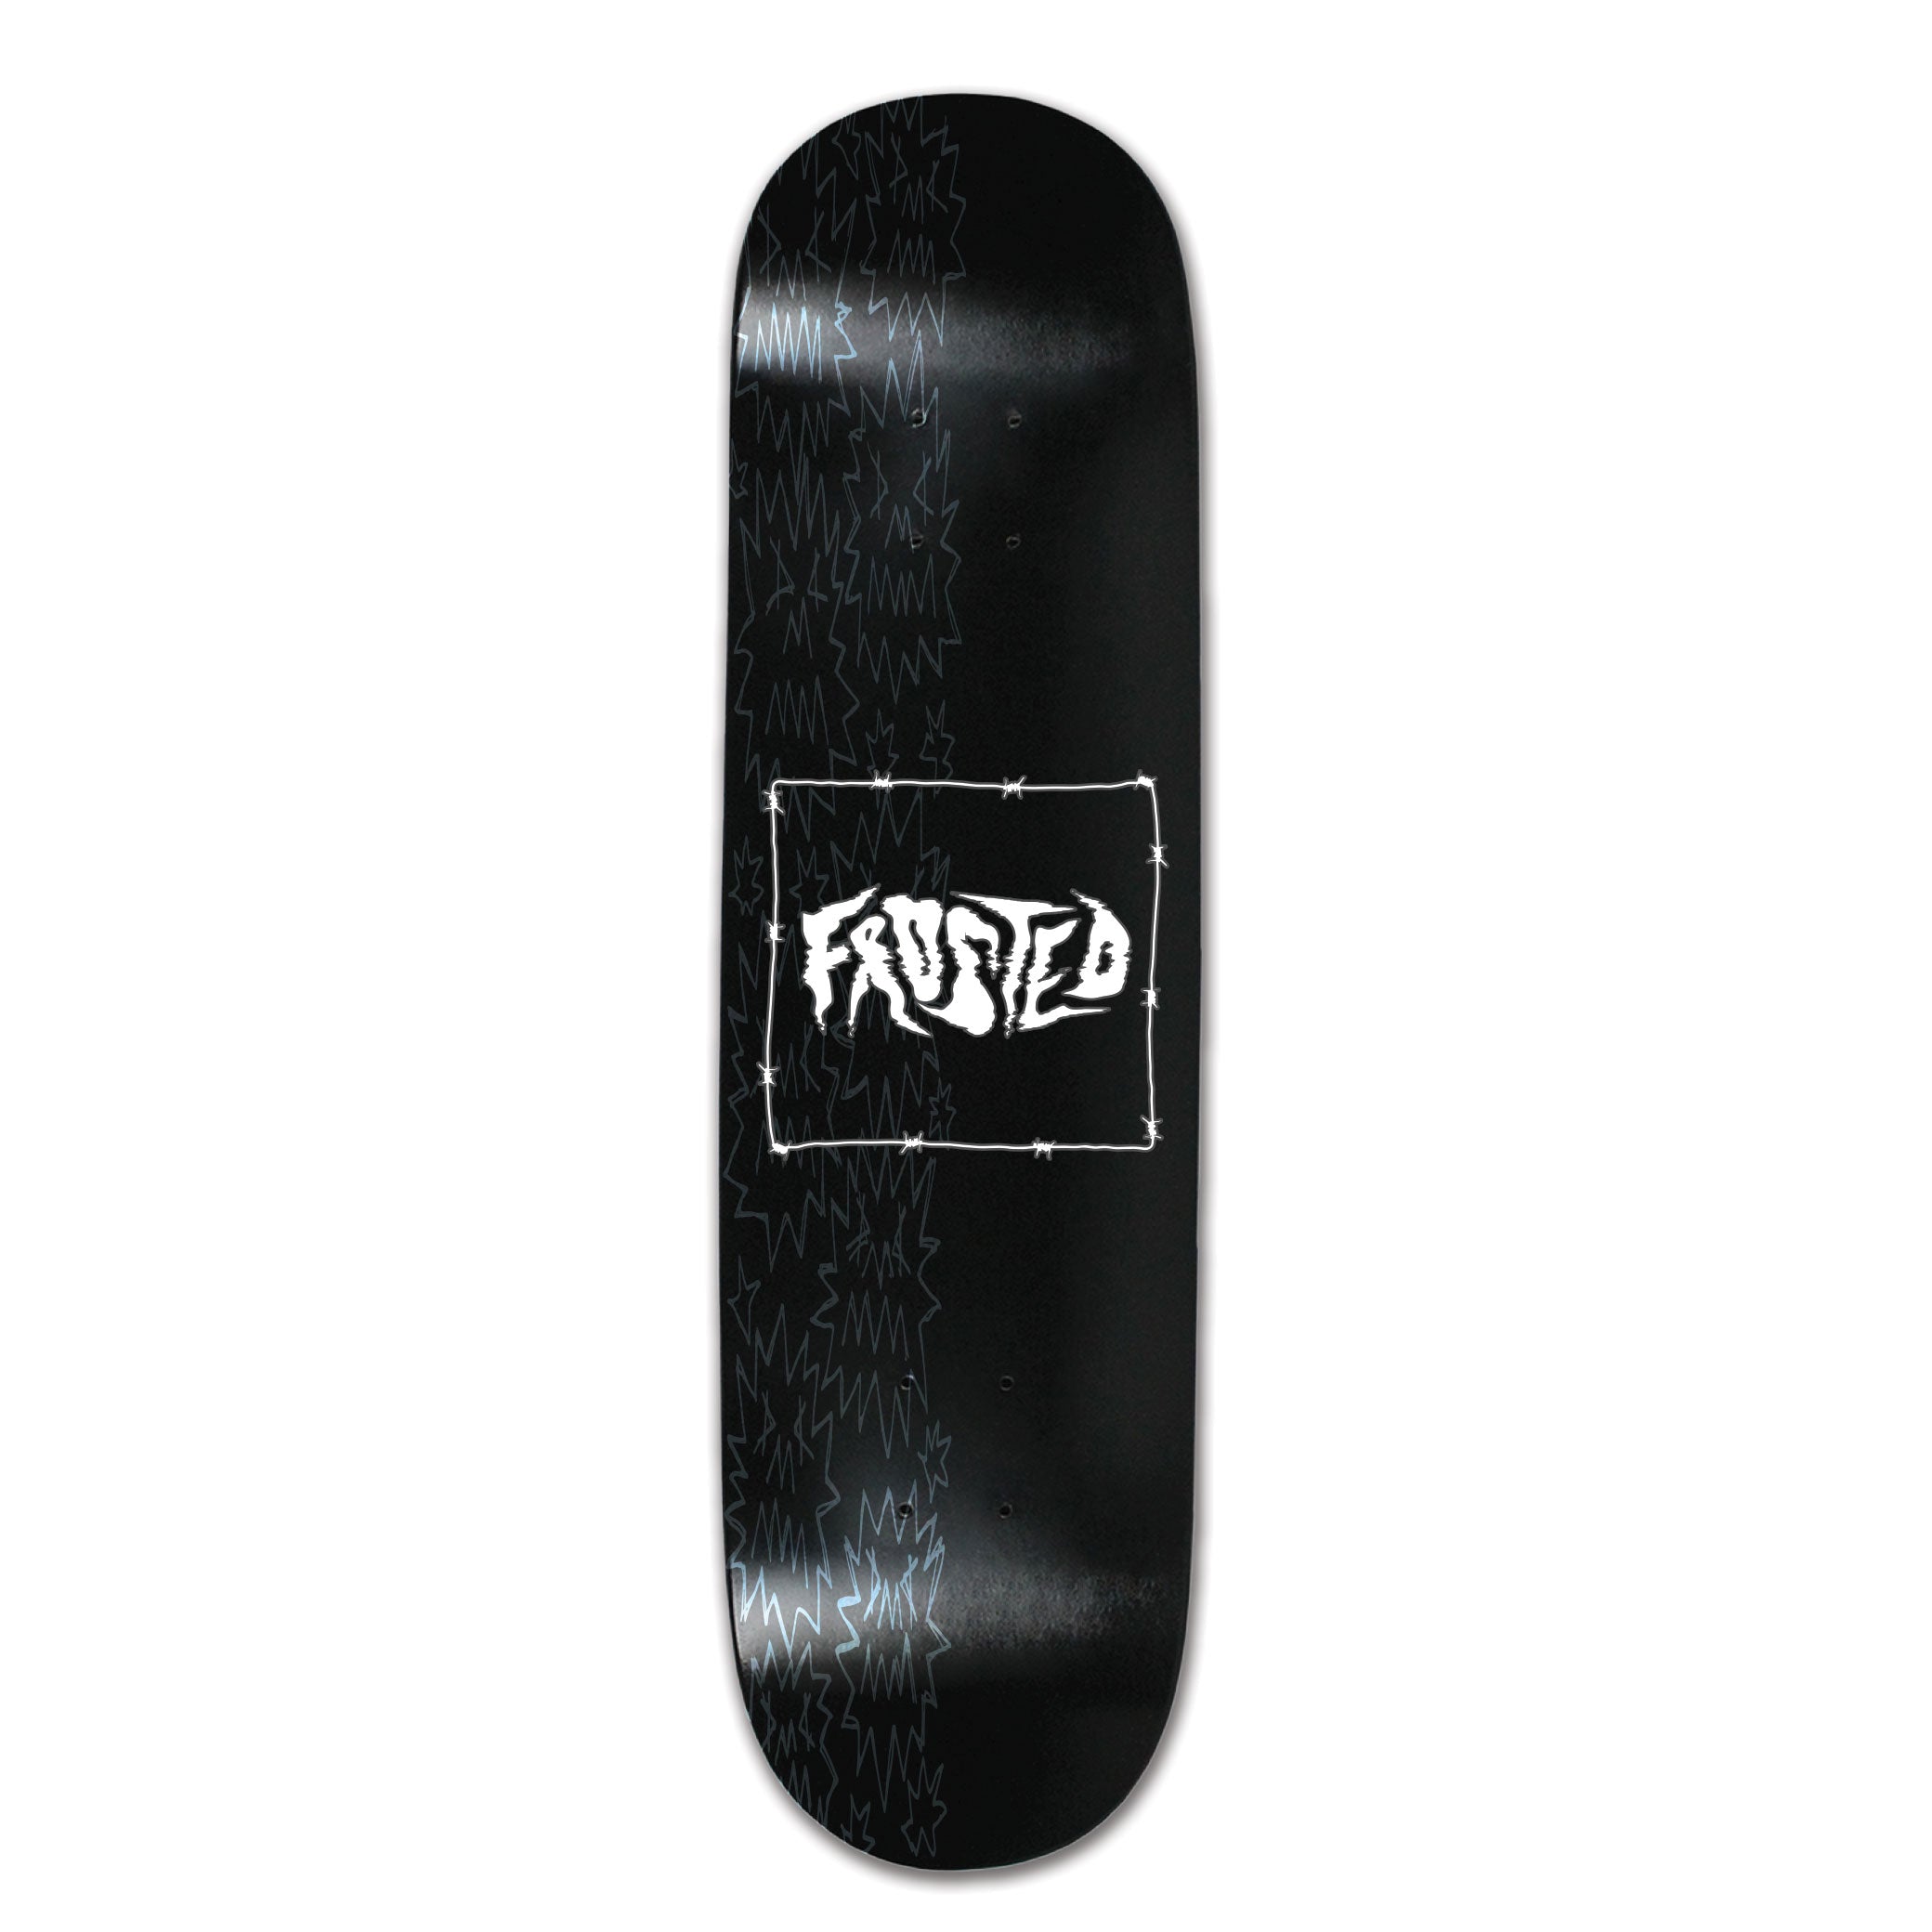 Boards – Frosted Skateboards